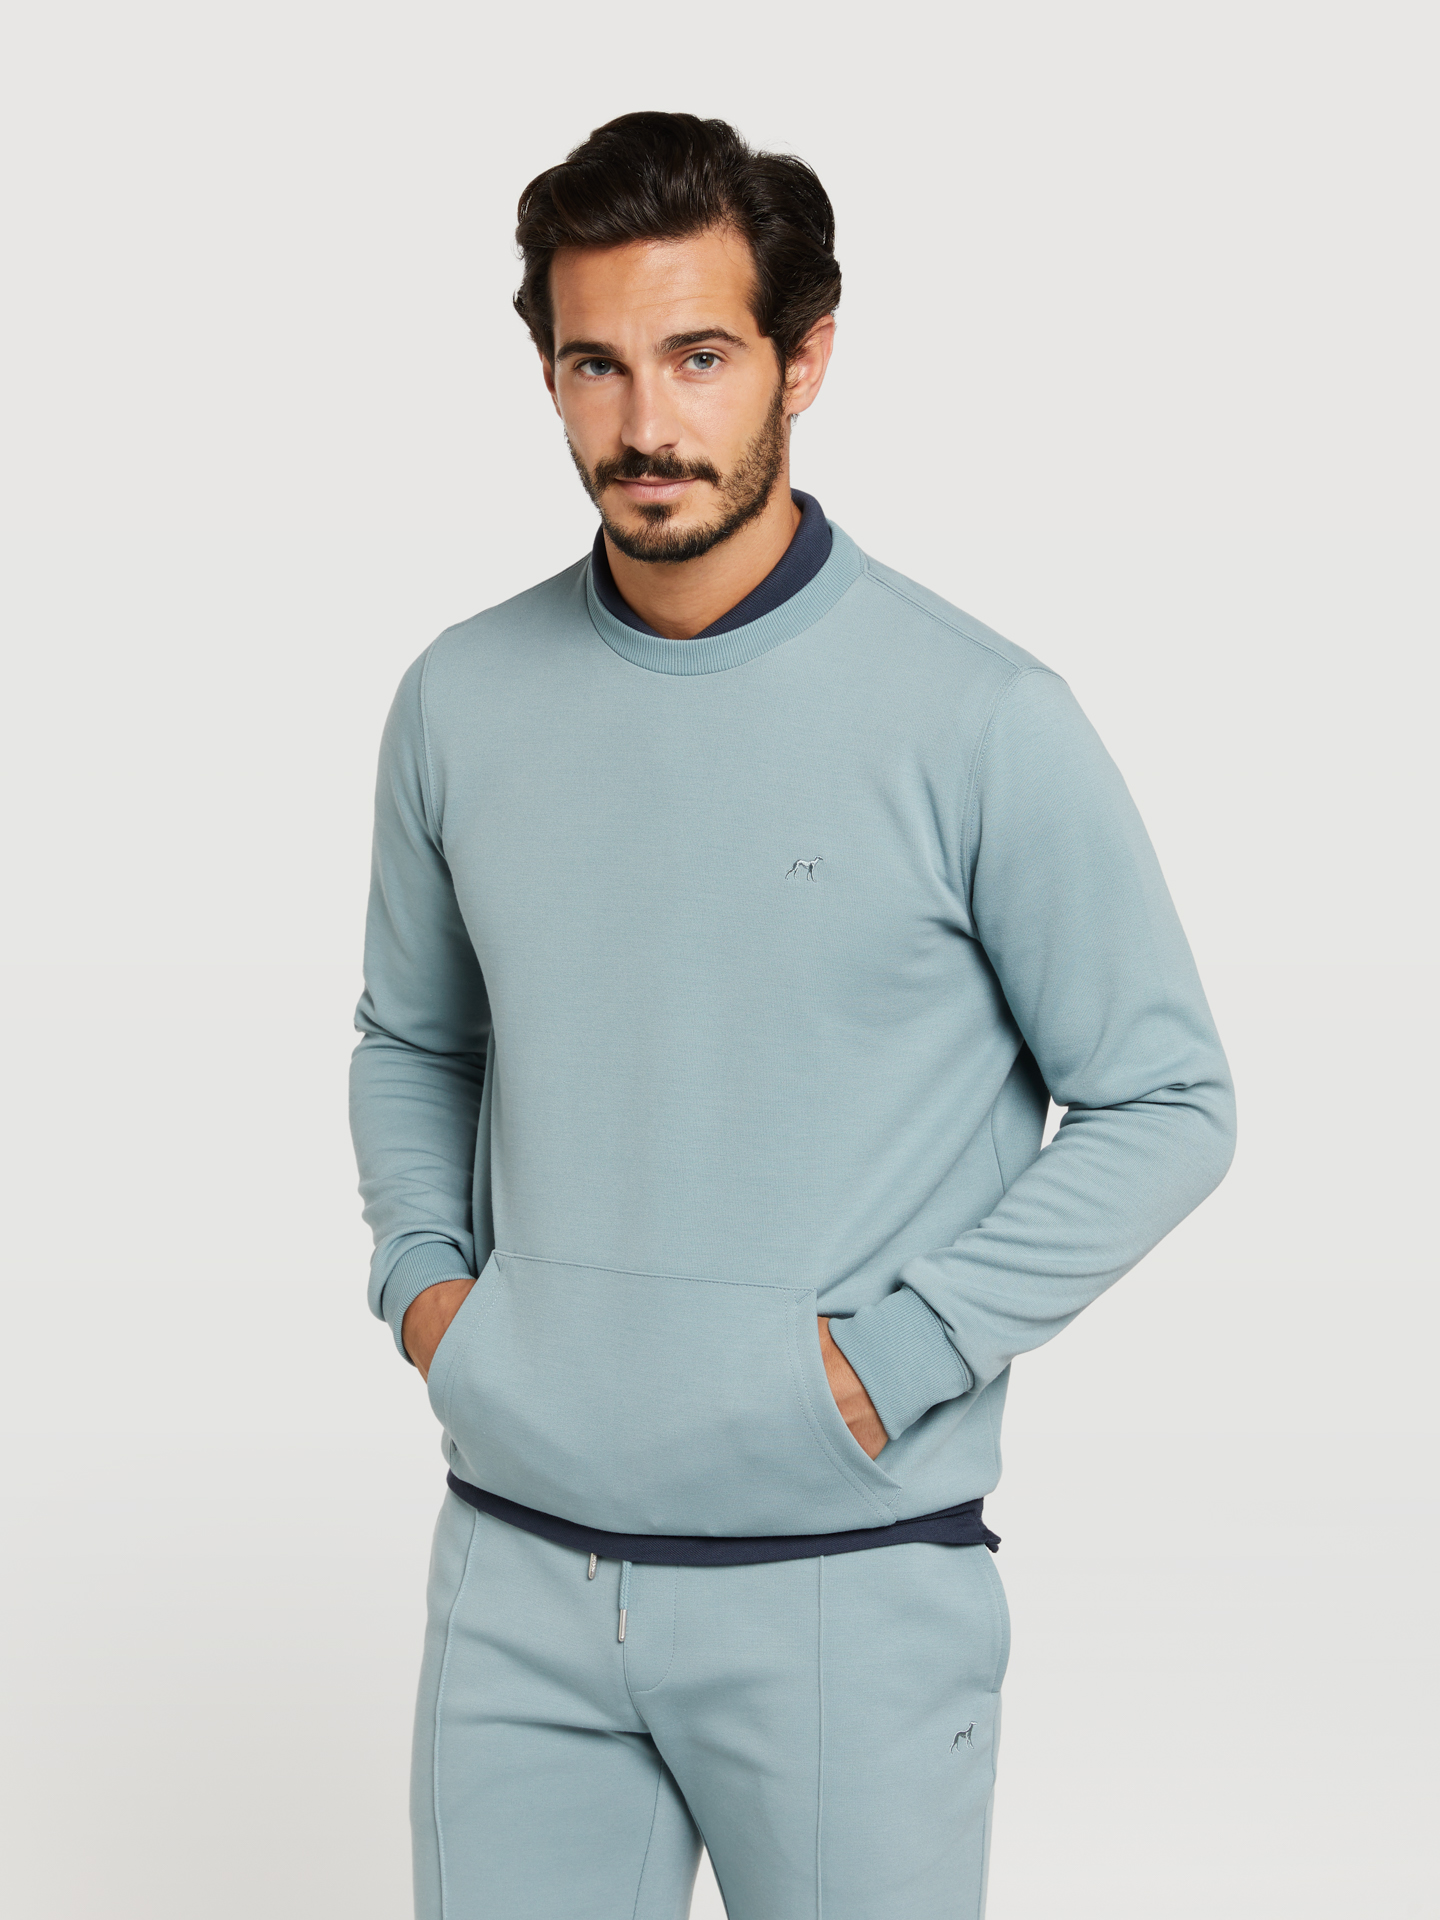 Sweatshirt Light Turquoise Sport Man